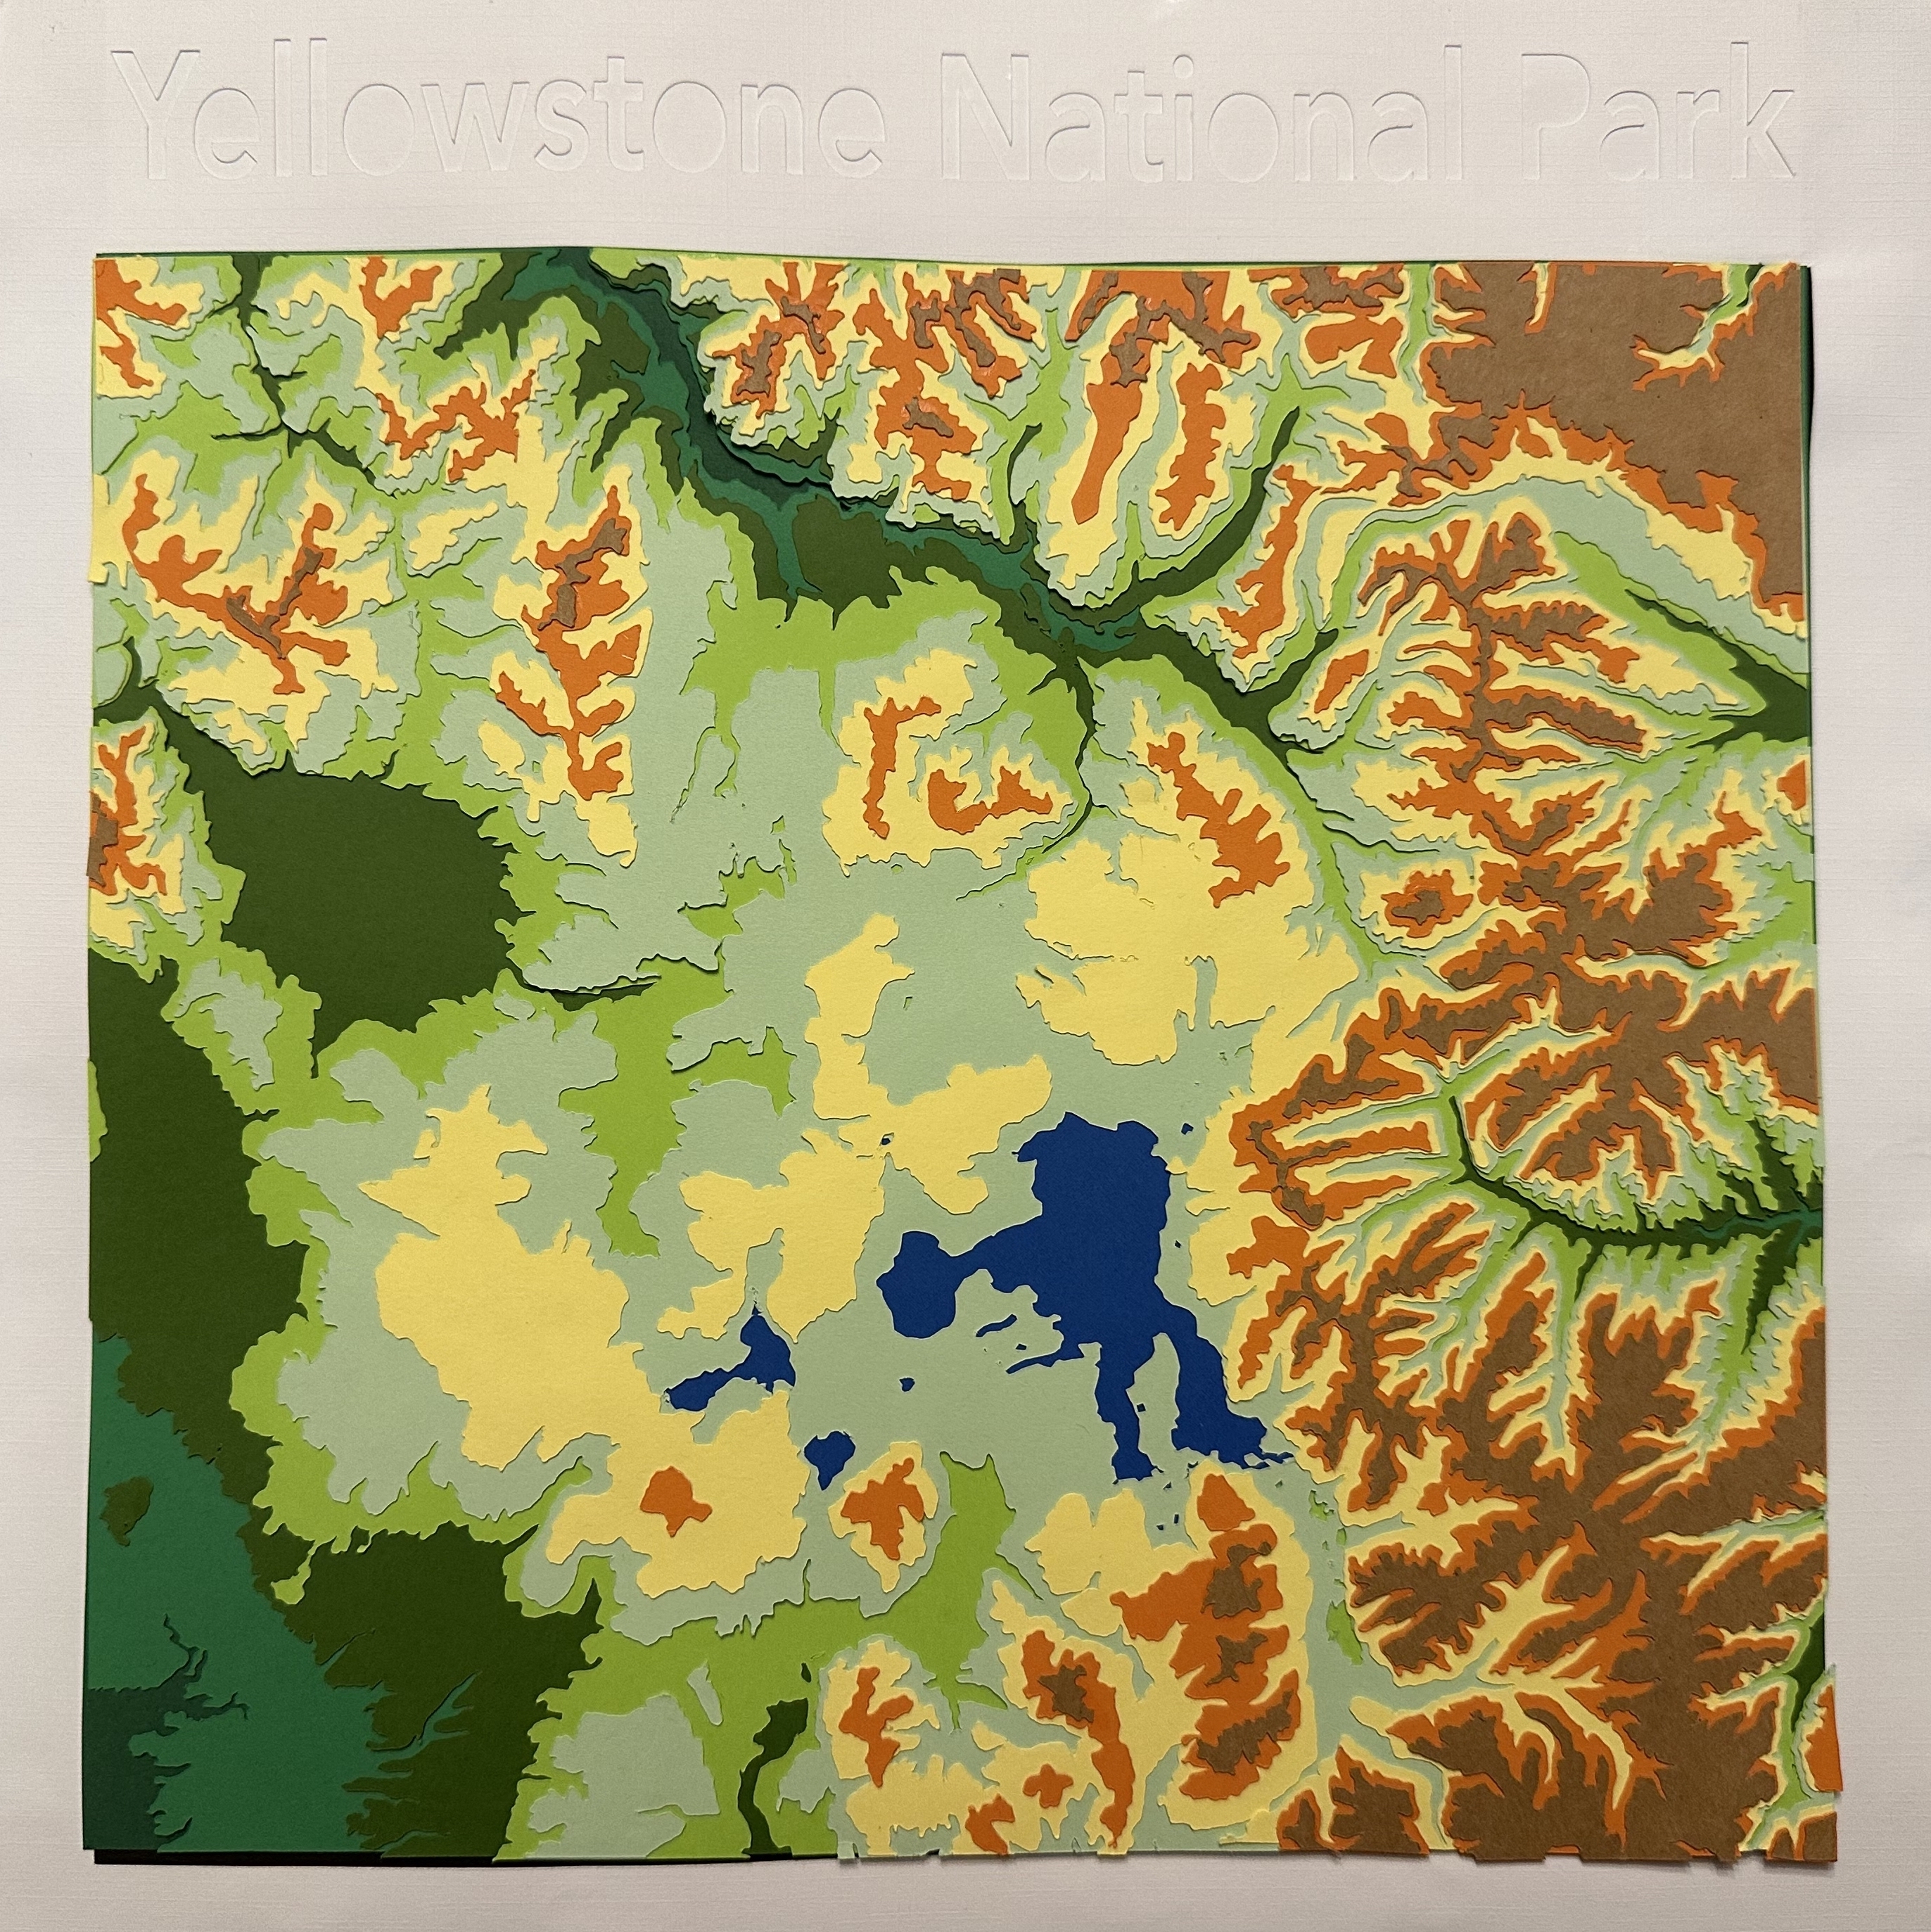 Yellowstone National Park Layered Paper cut Map